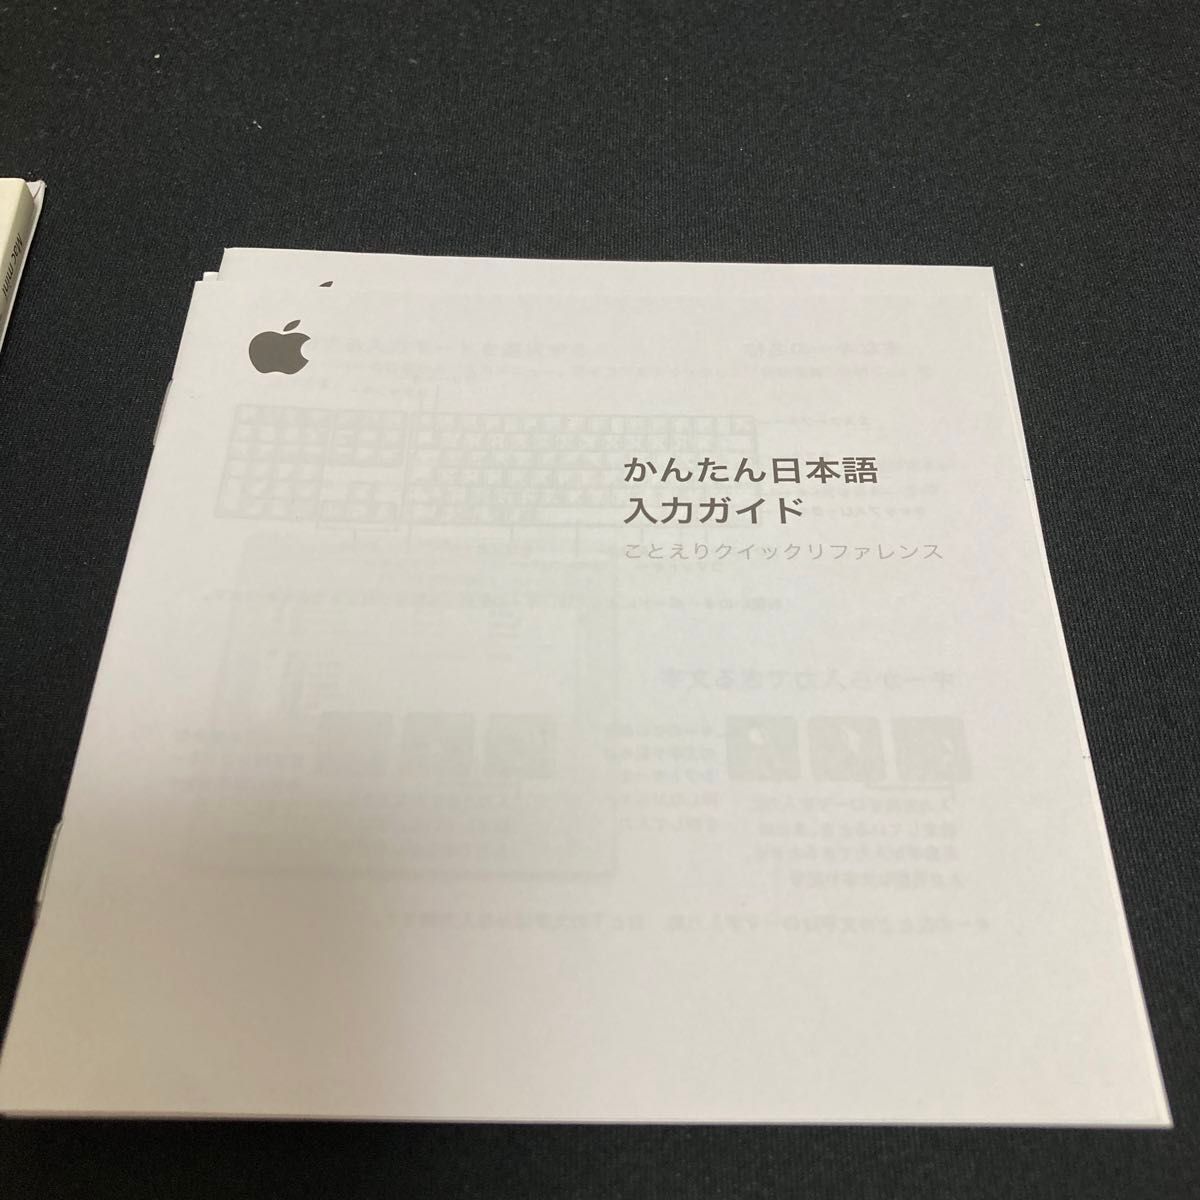 Mac mini G4 最終インストールディスク　OSX Tiger 10.4.3とOS9.2.2